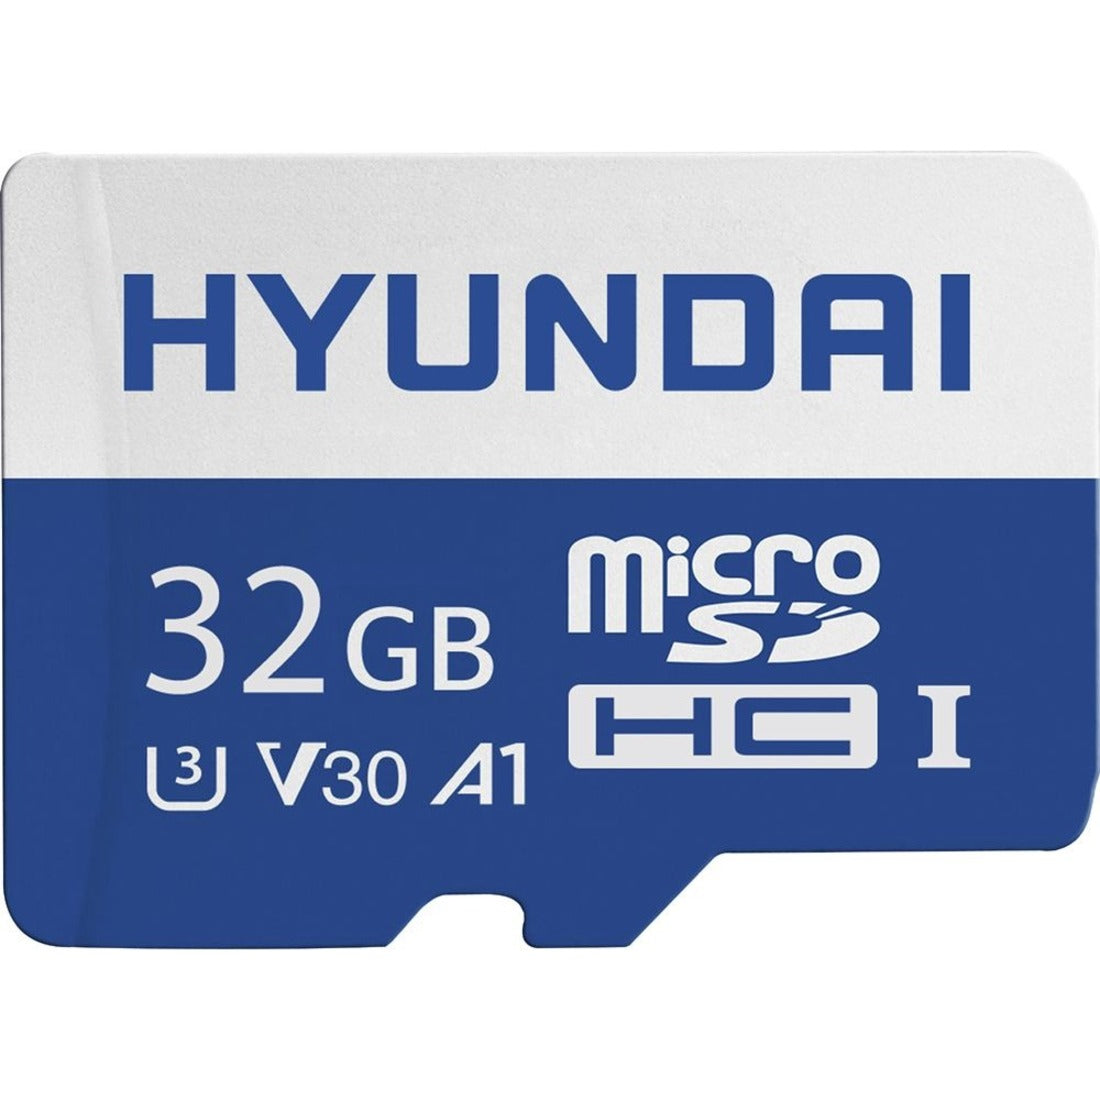 Hyundai SDC32GU3 32GB microSDHC Card, Class 10/UHS-I (U3), 90 MB/s Read Speed, Lifetime Warranty